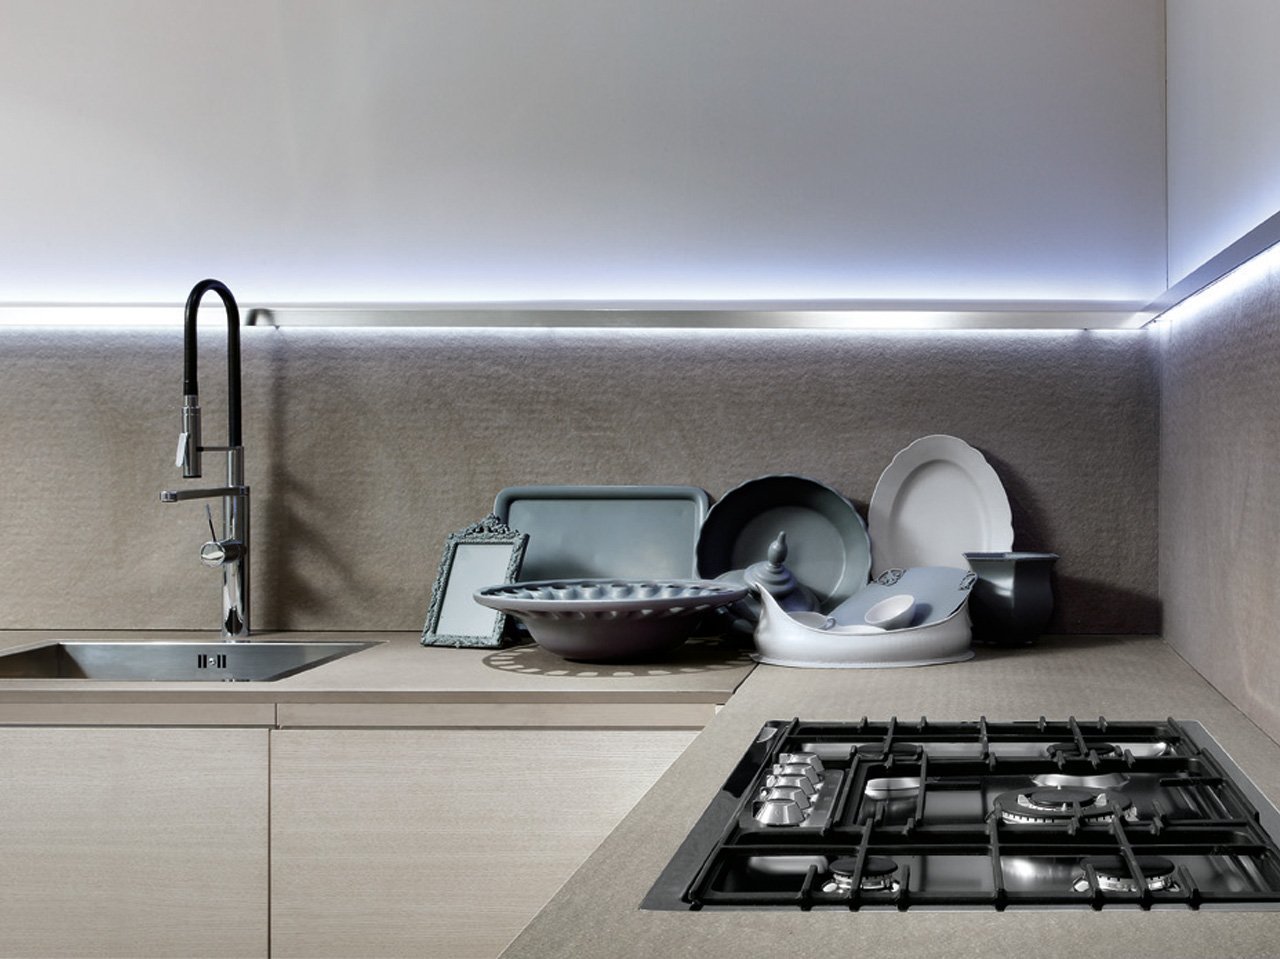 подключение подсветки на кухне под шкафами светодиодами